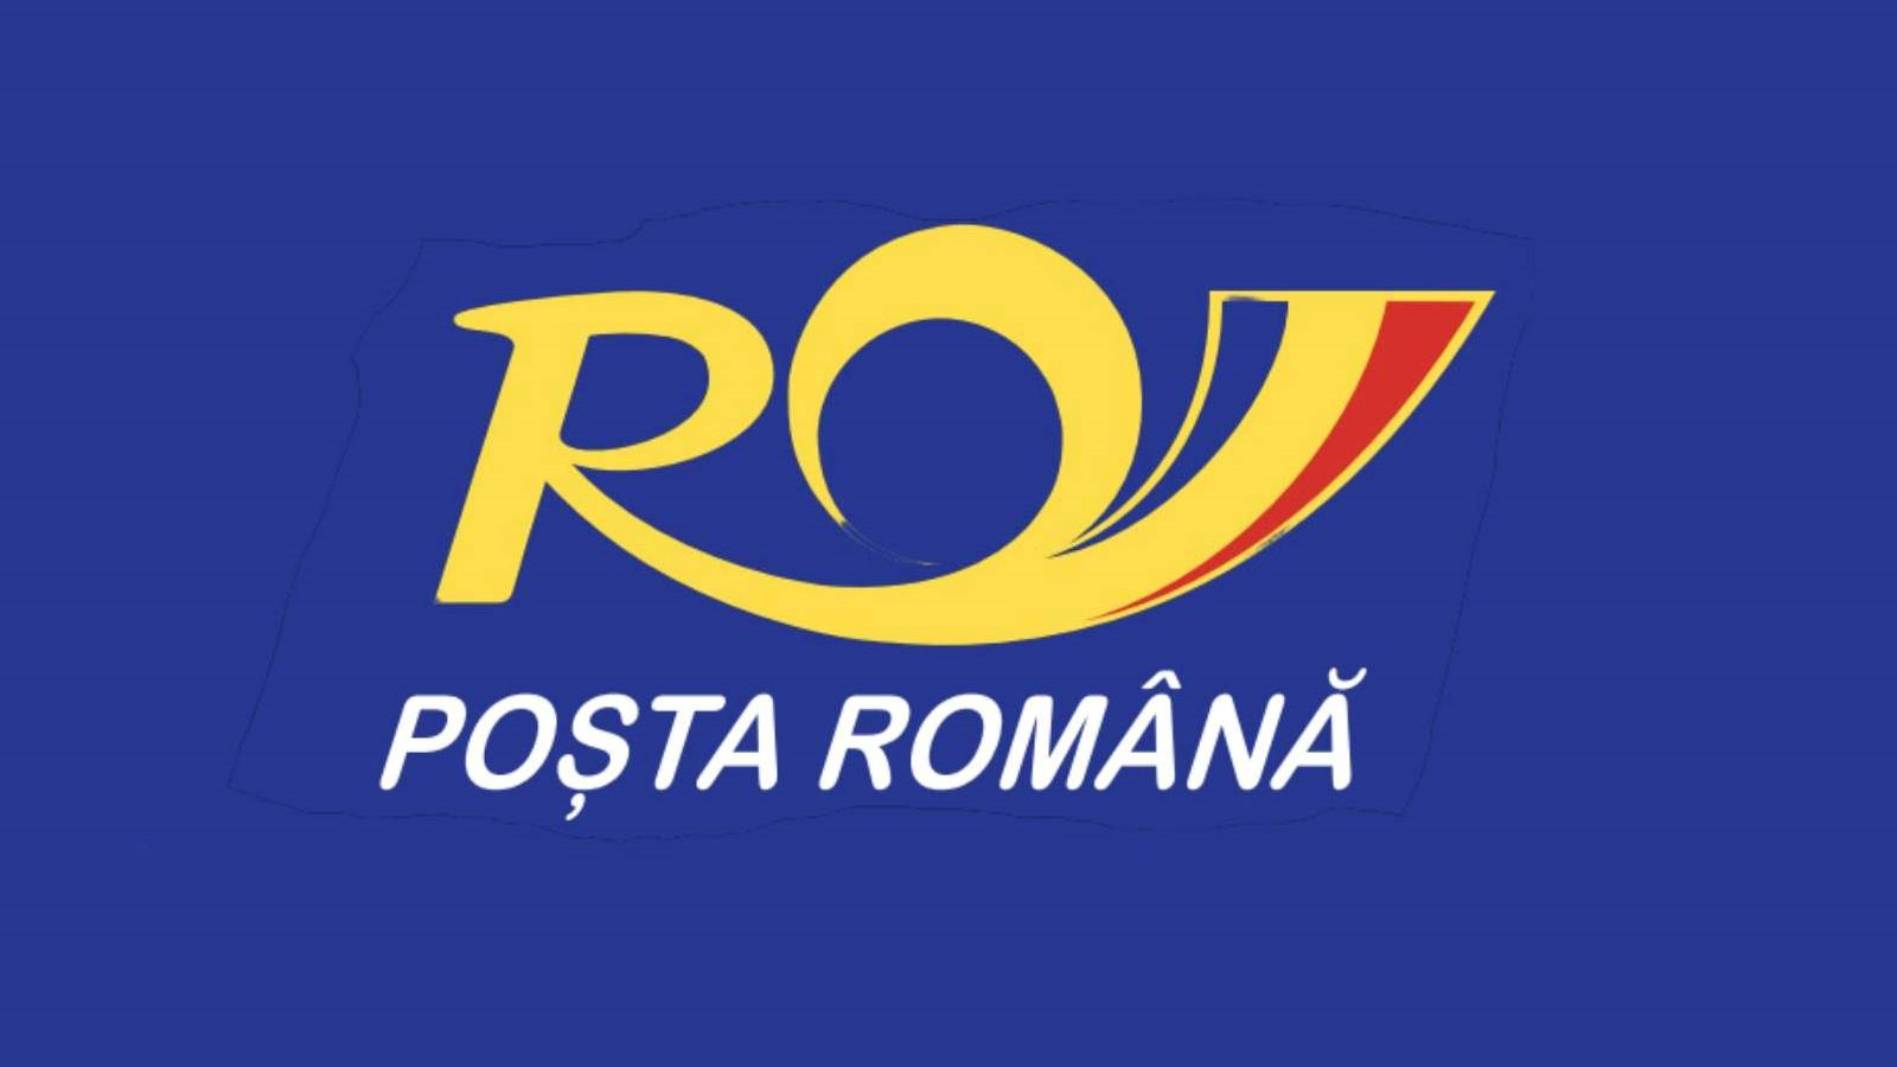 Posta Romana Inchide Subunitatile Toata Romania Cand De ce